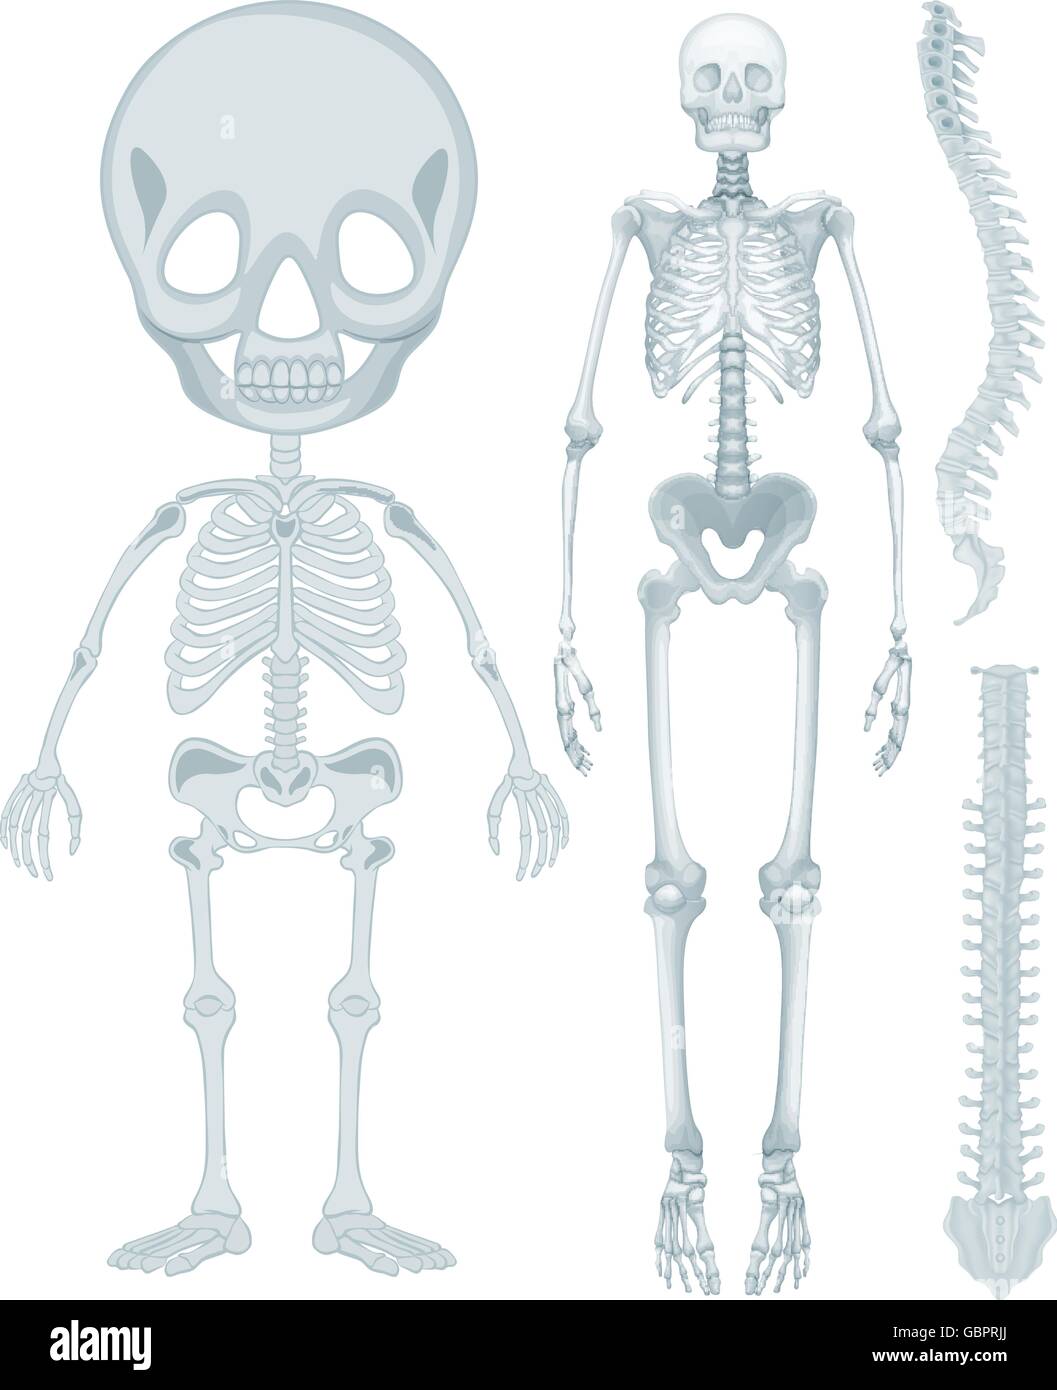 Skeletal system for human being illustration Stock Vector